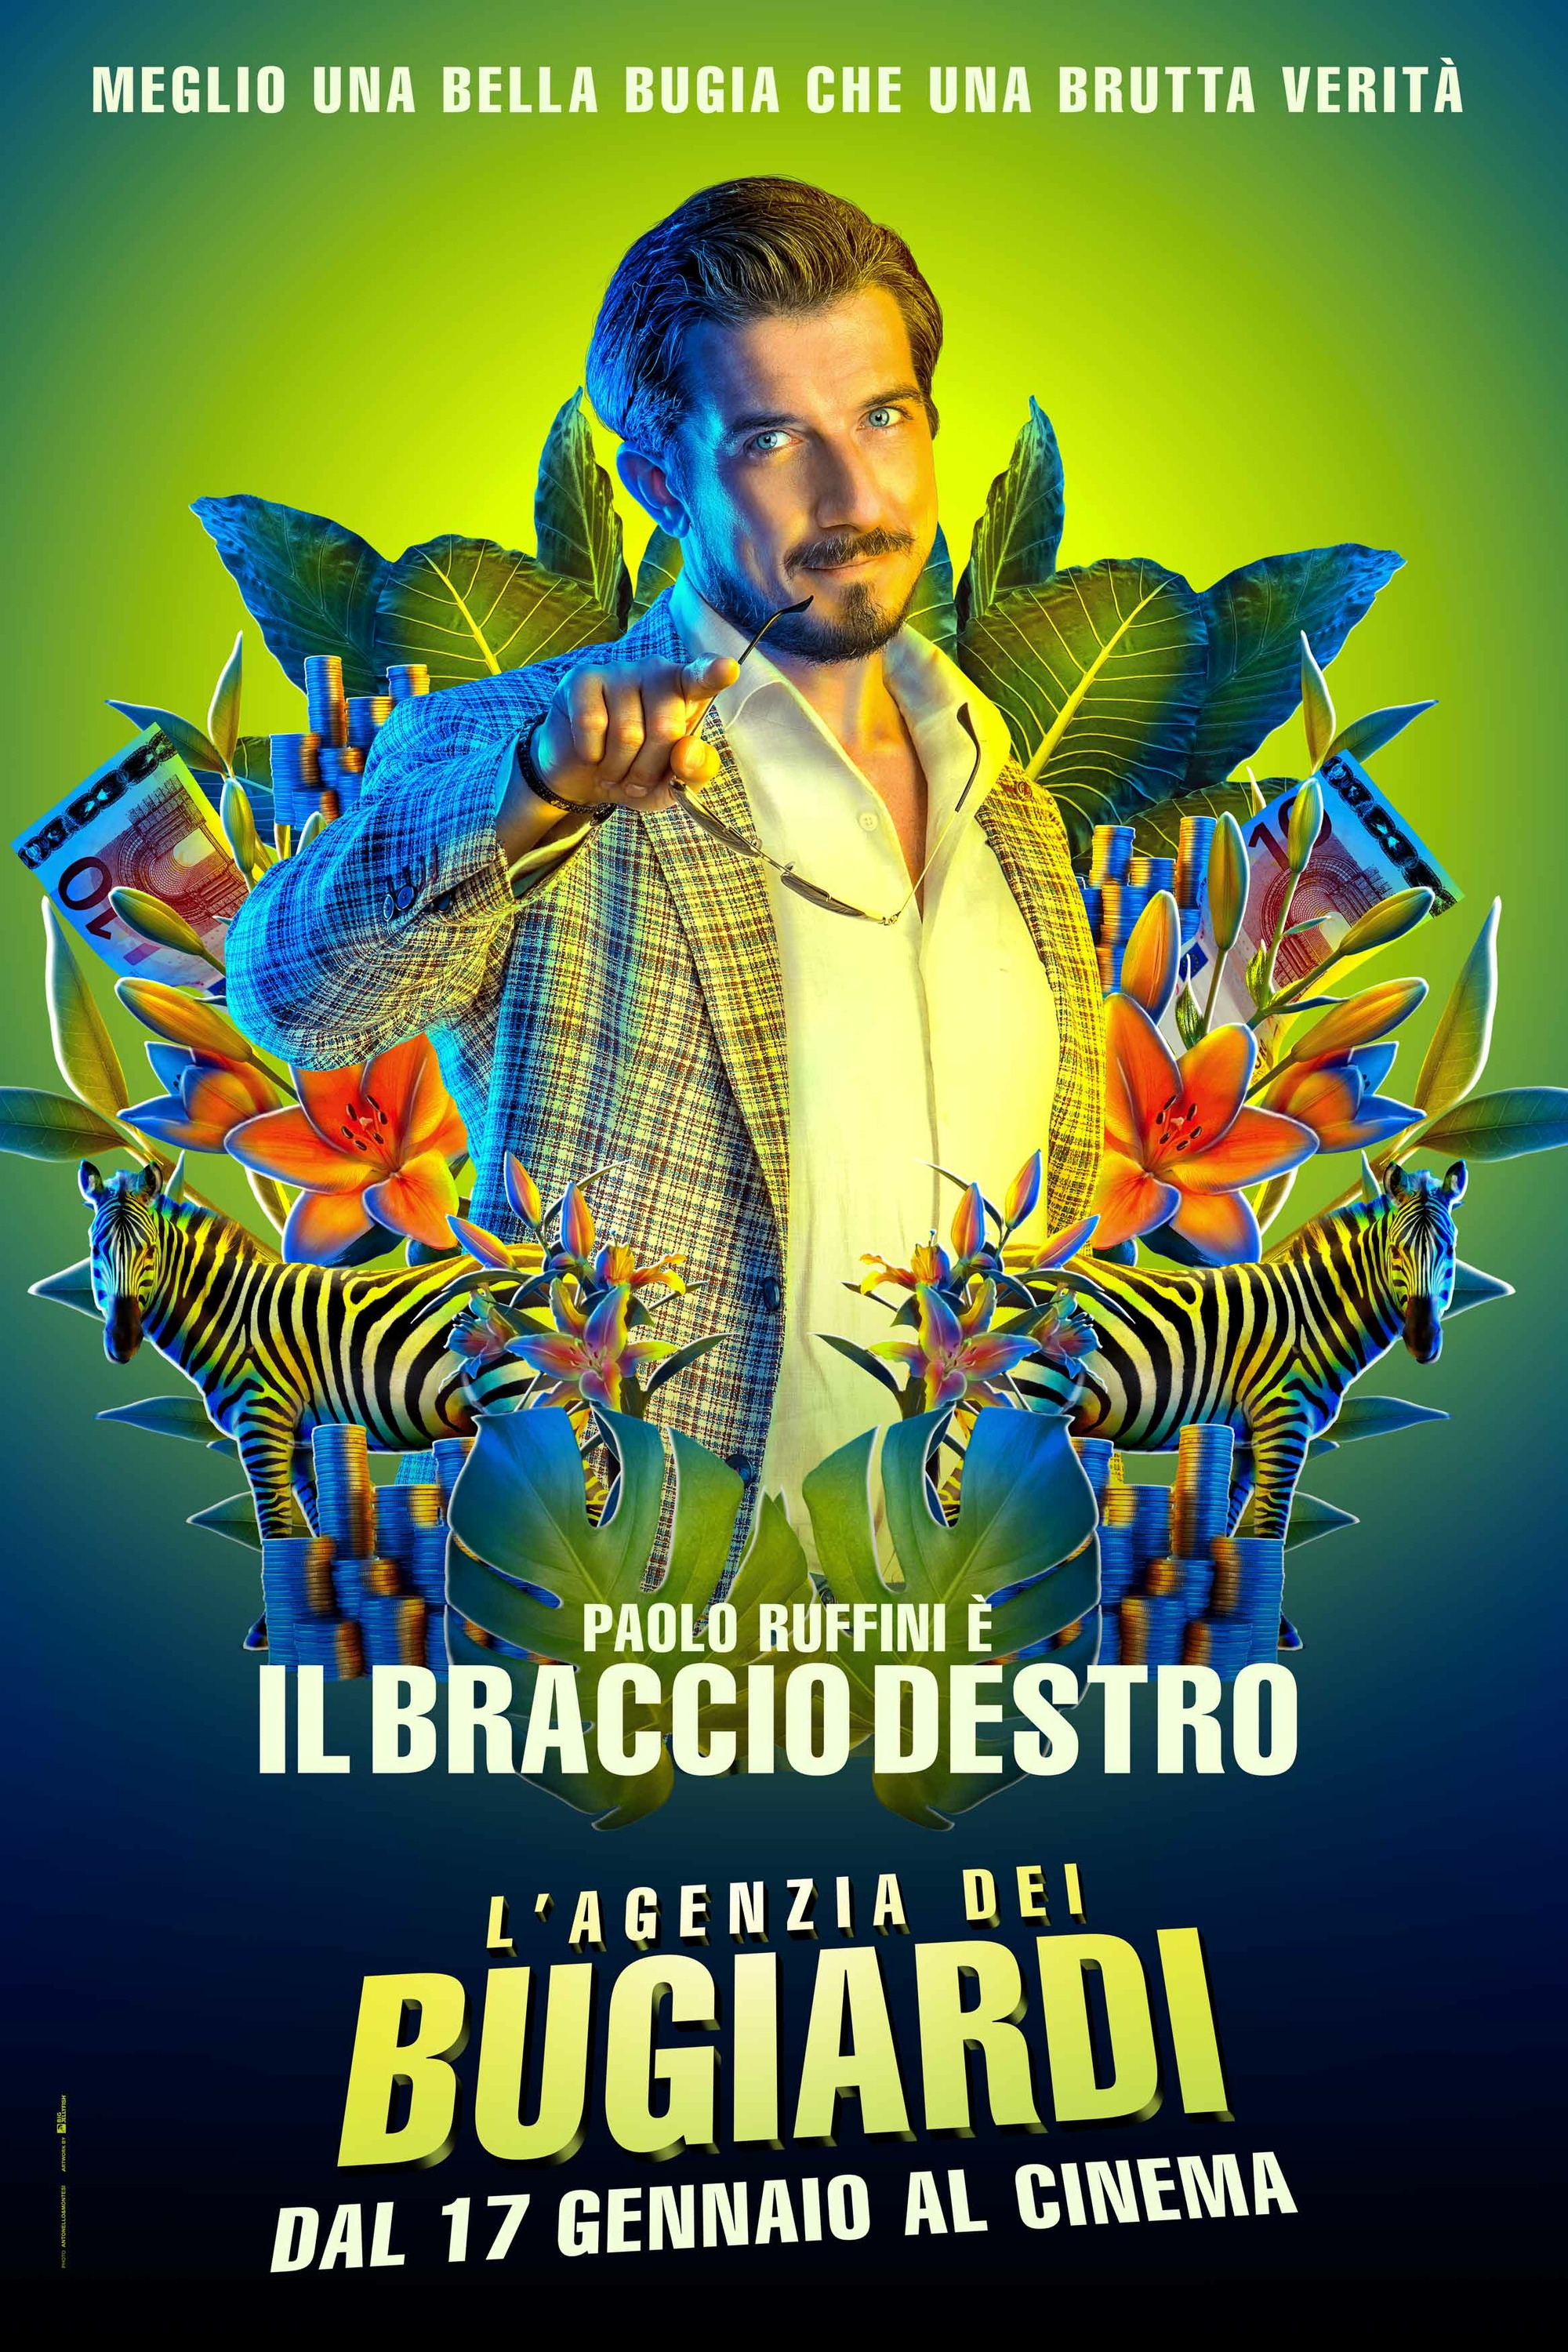 Mega Sized Movie Poster Image for L'agenzia dei bugiardi (#6 of 7)